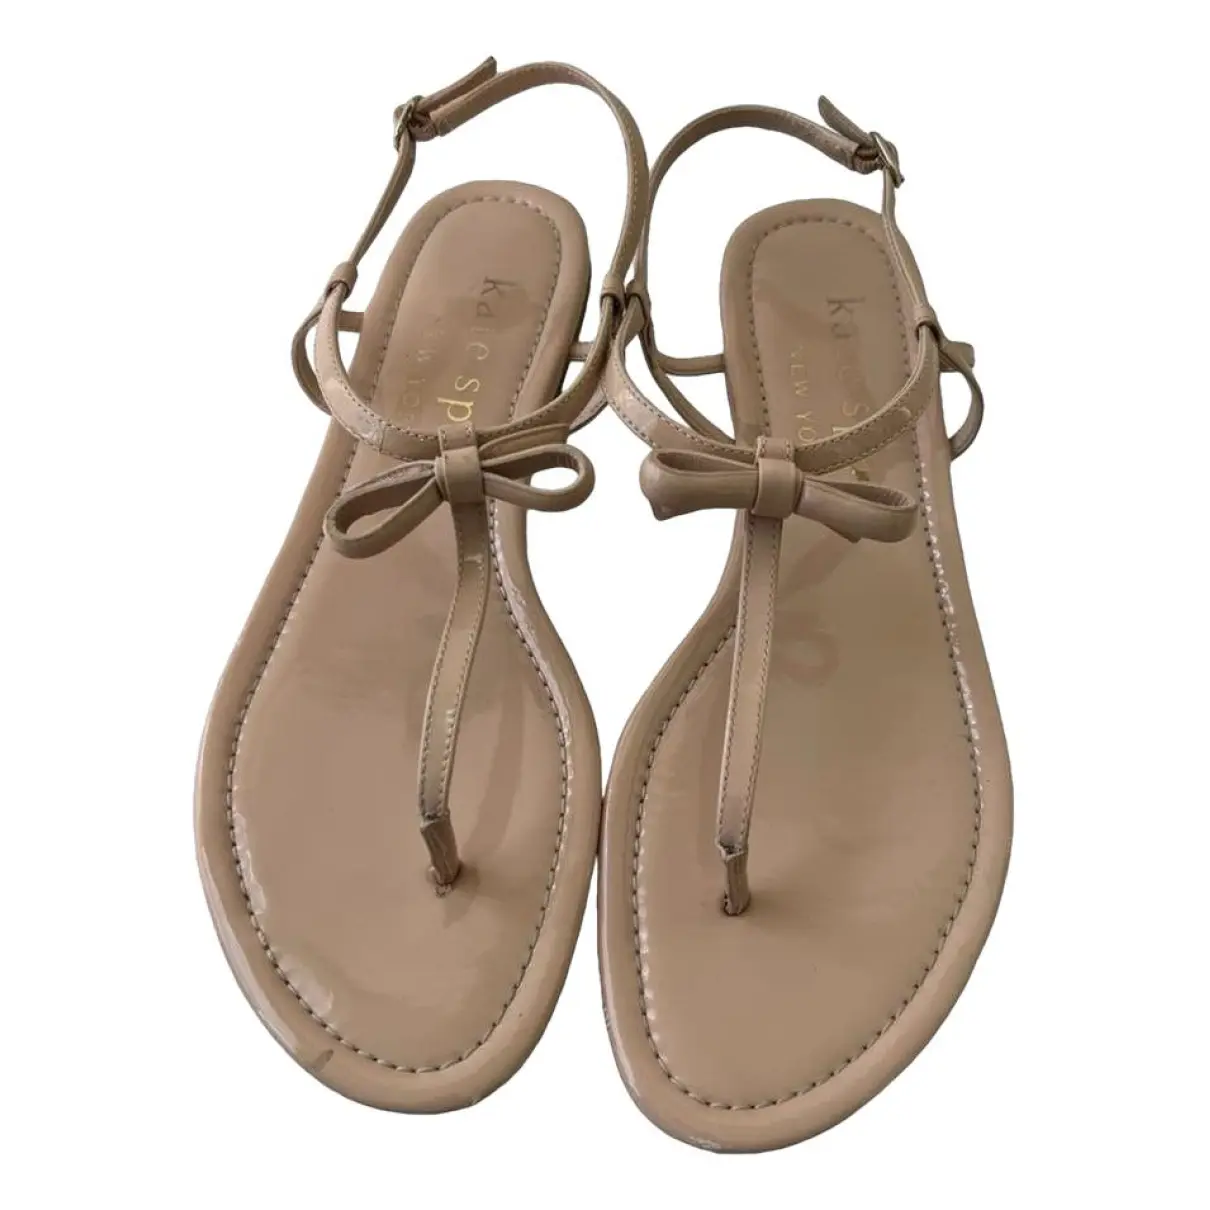 Patent leather sandal Kate Spade